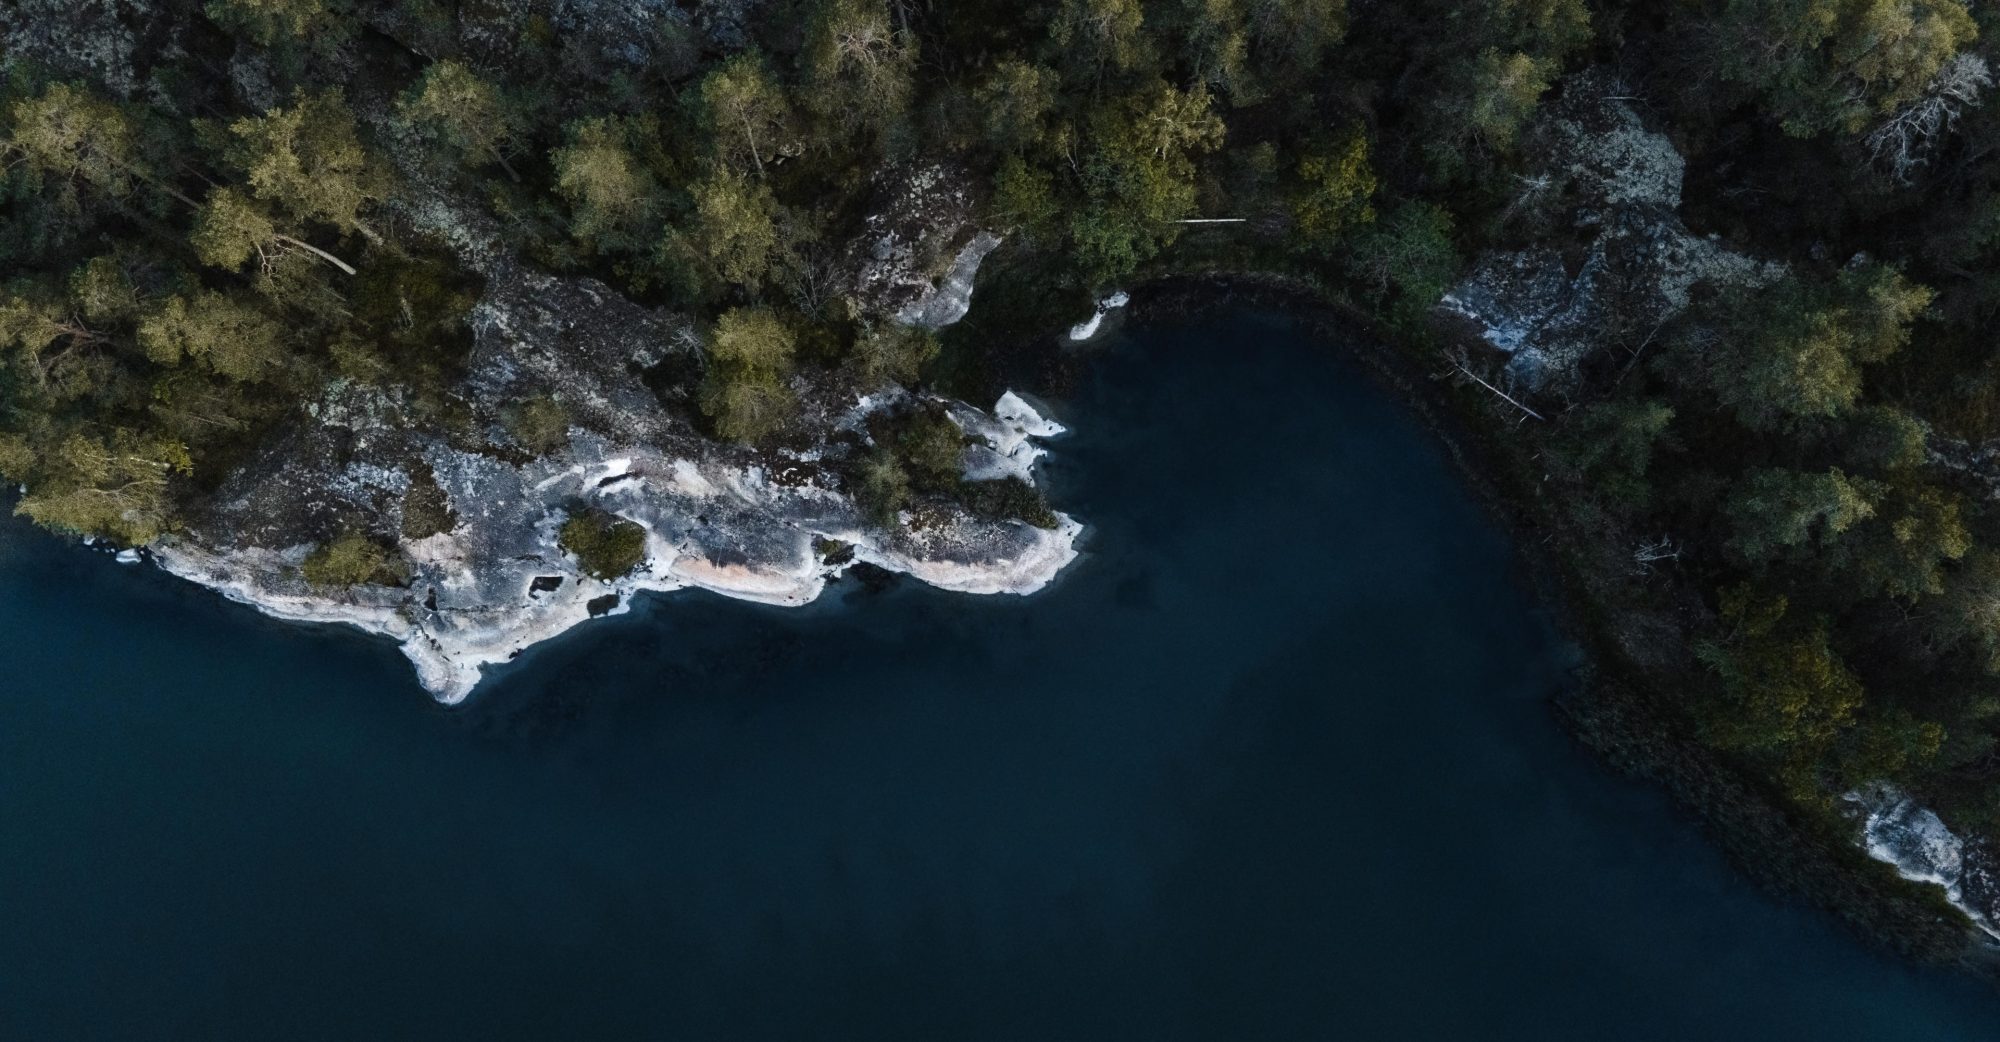 Drone image of rocky shore